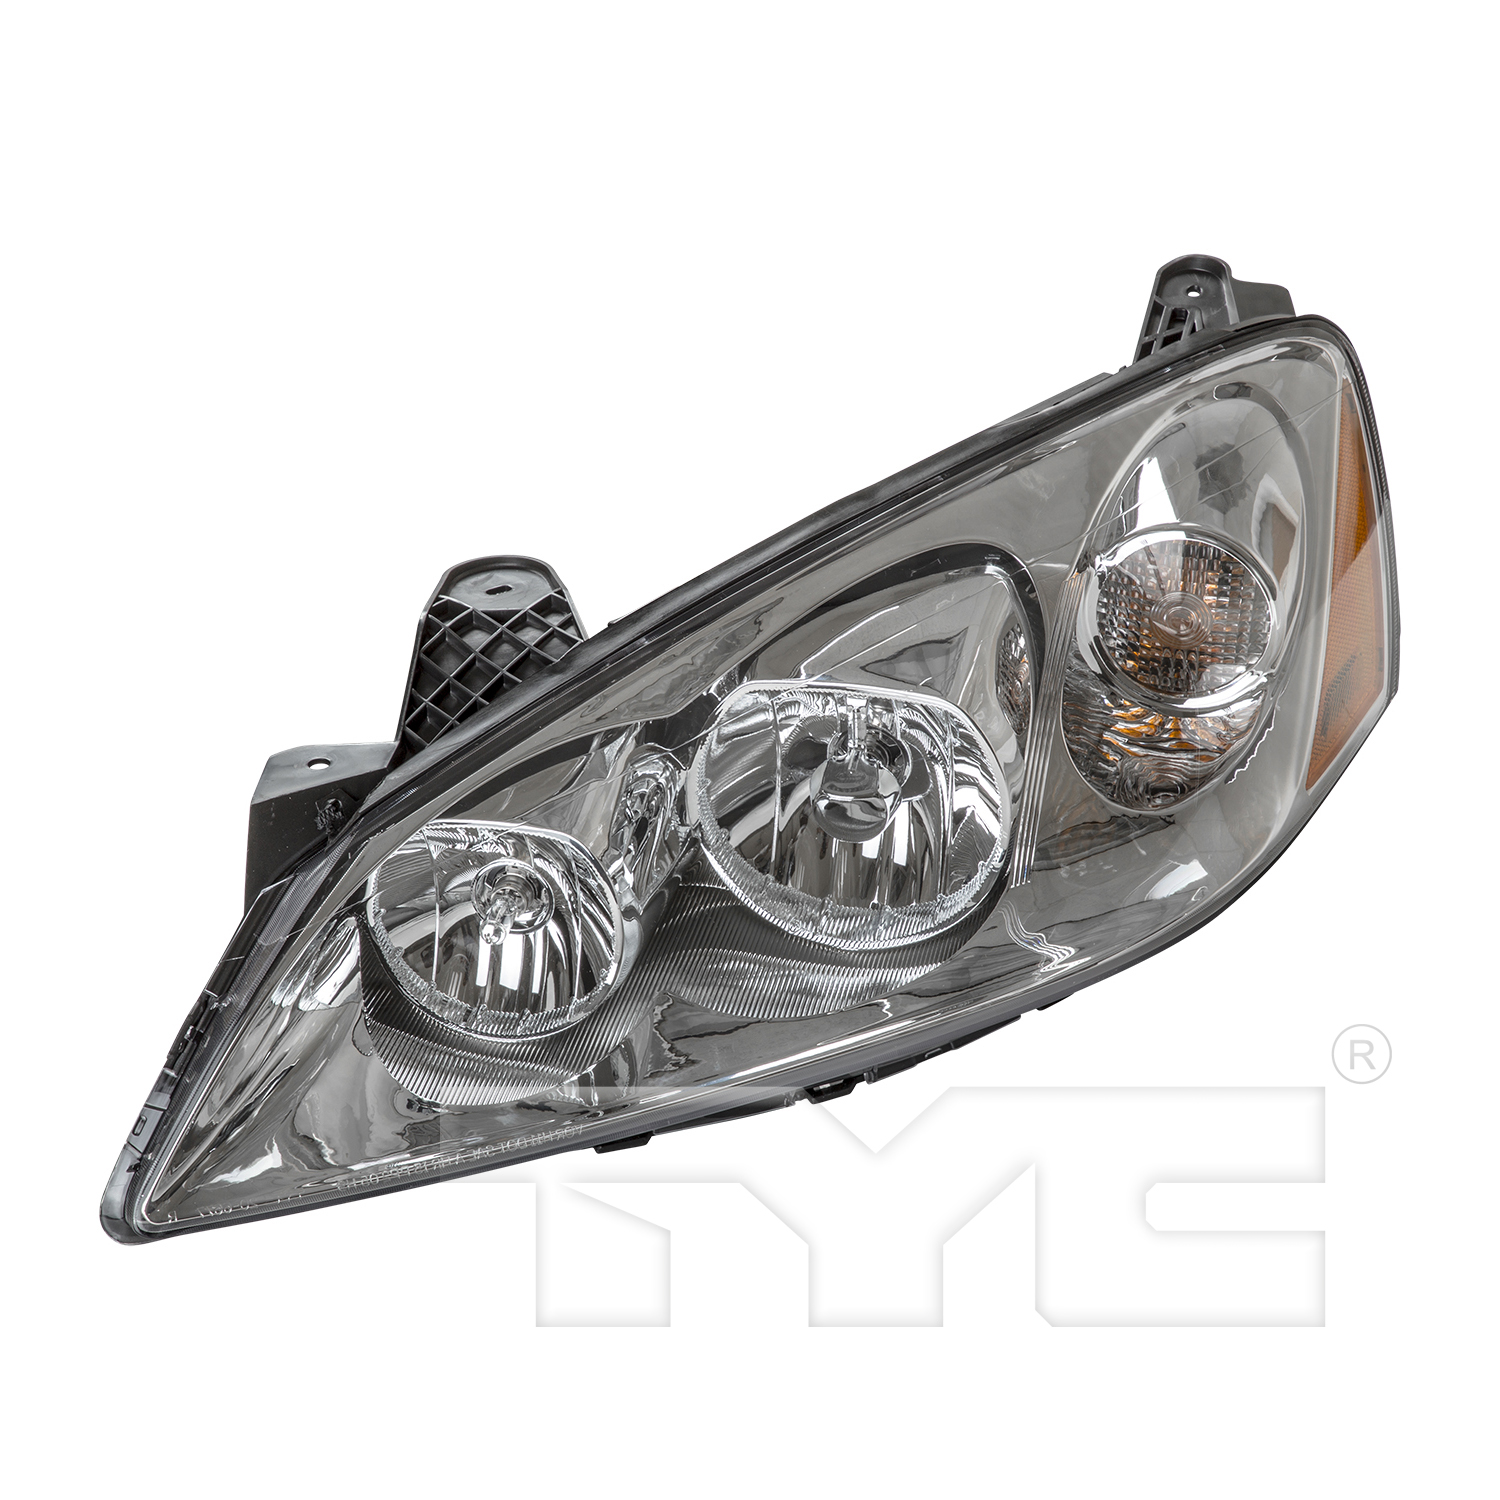 Aftermarket HEADLIGHTS for PONTIAC - G6, G6,09-10,LT Headlamp assy composite